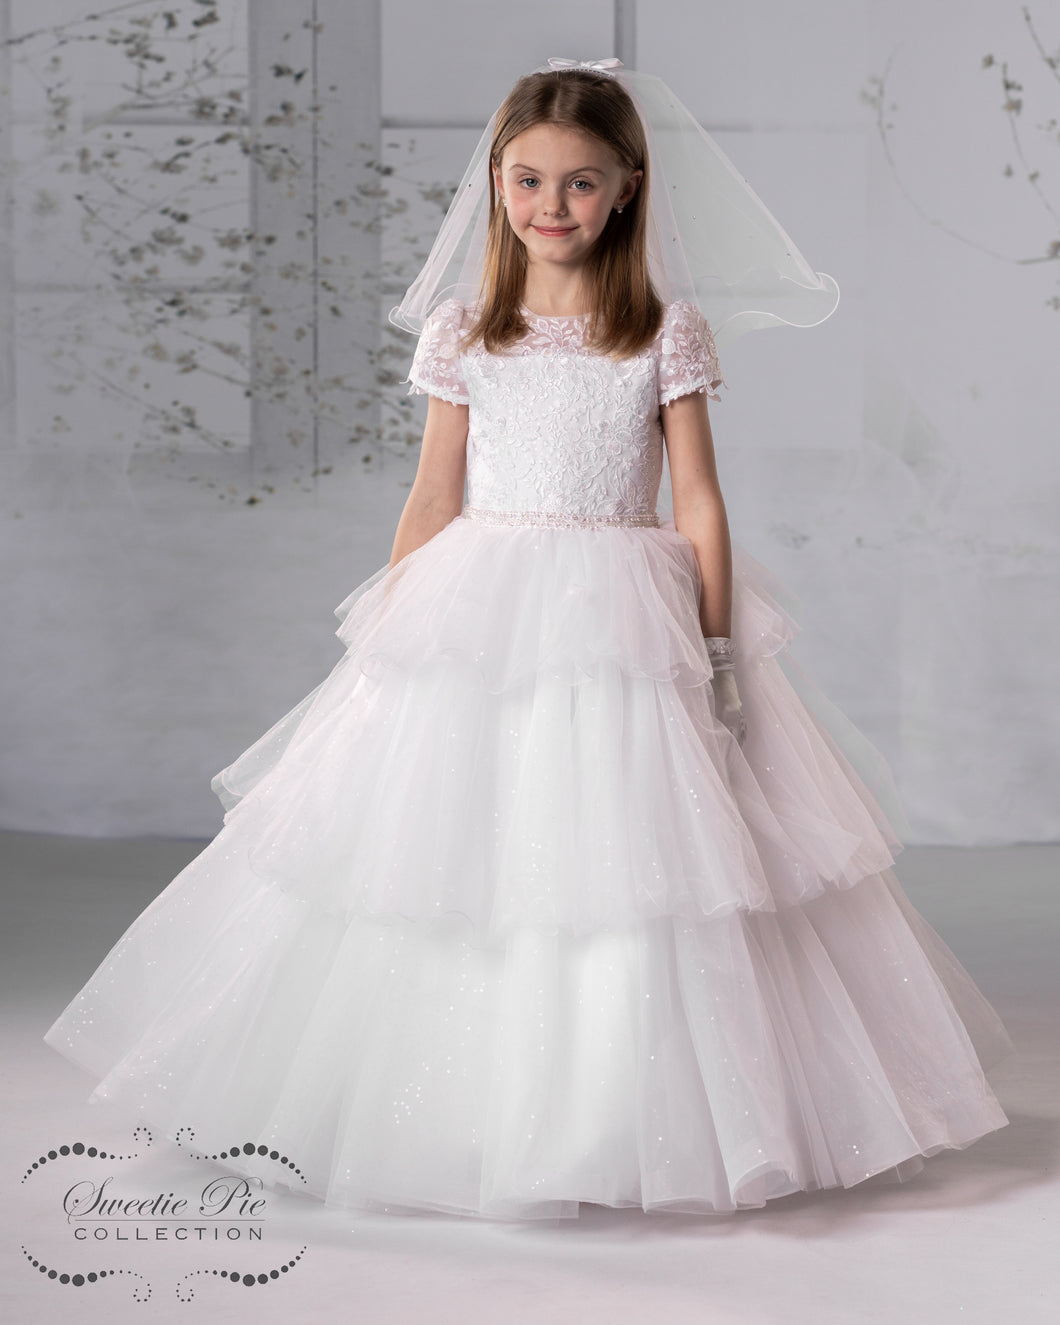 Sweetie Pie Girls White Communion Dress:- 5002